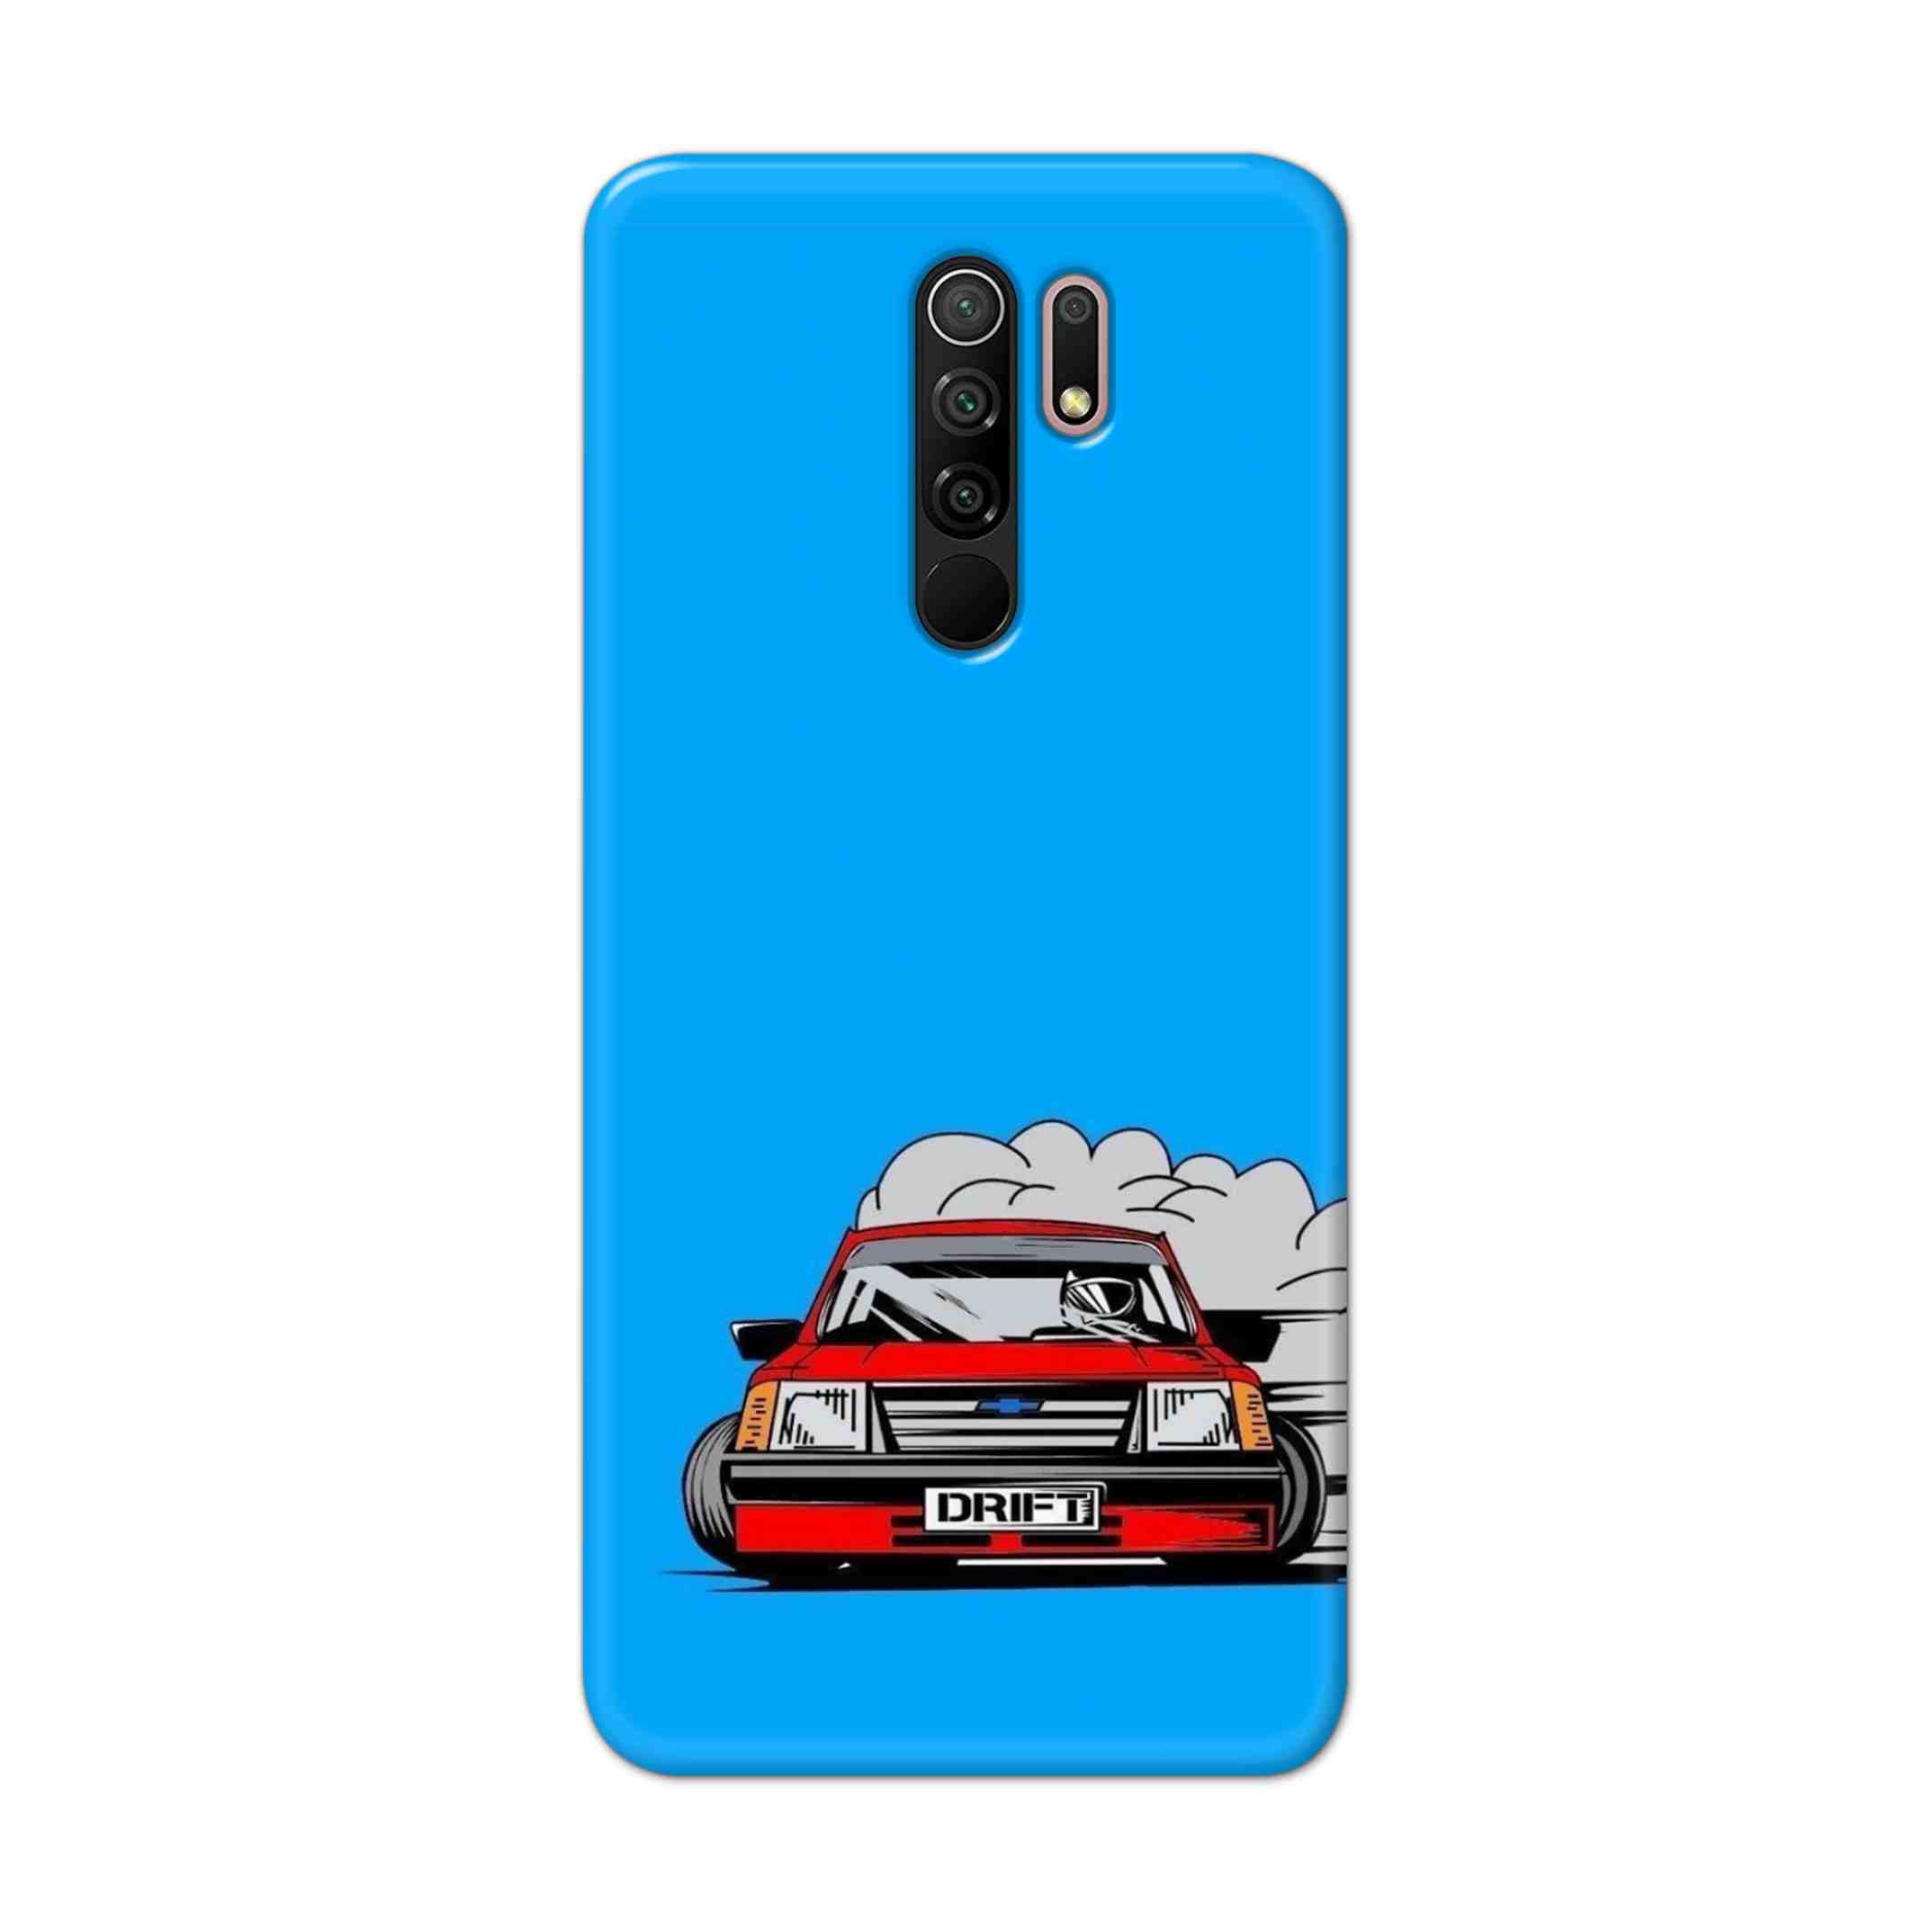 Buy Drift Hard Back Mobile Phone Case Cover For Xiaomi Redmi 9 Prime Online